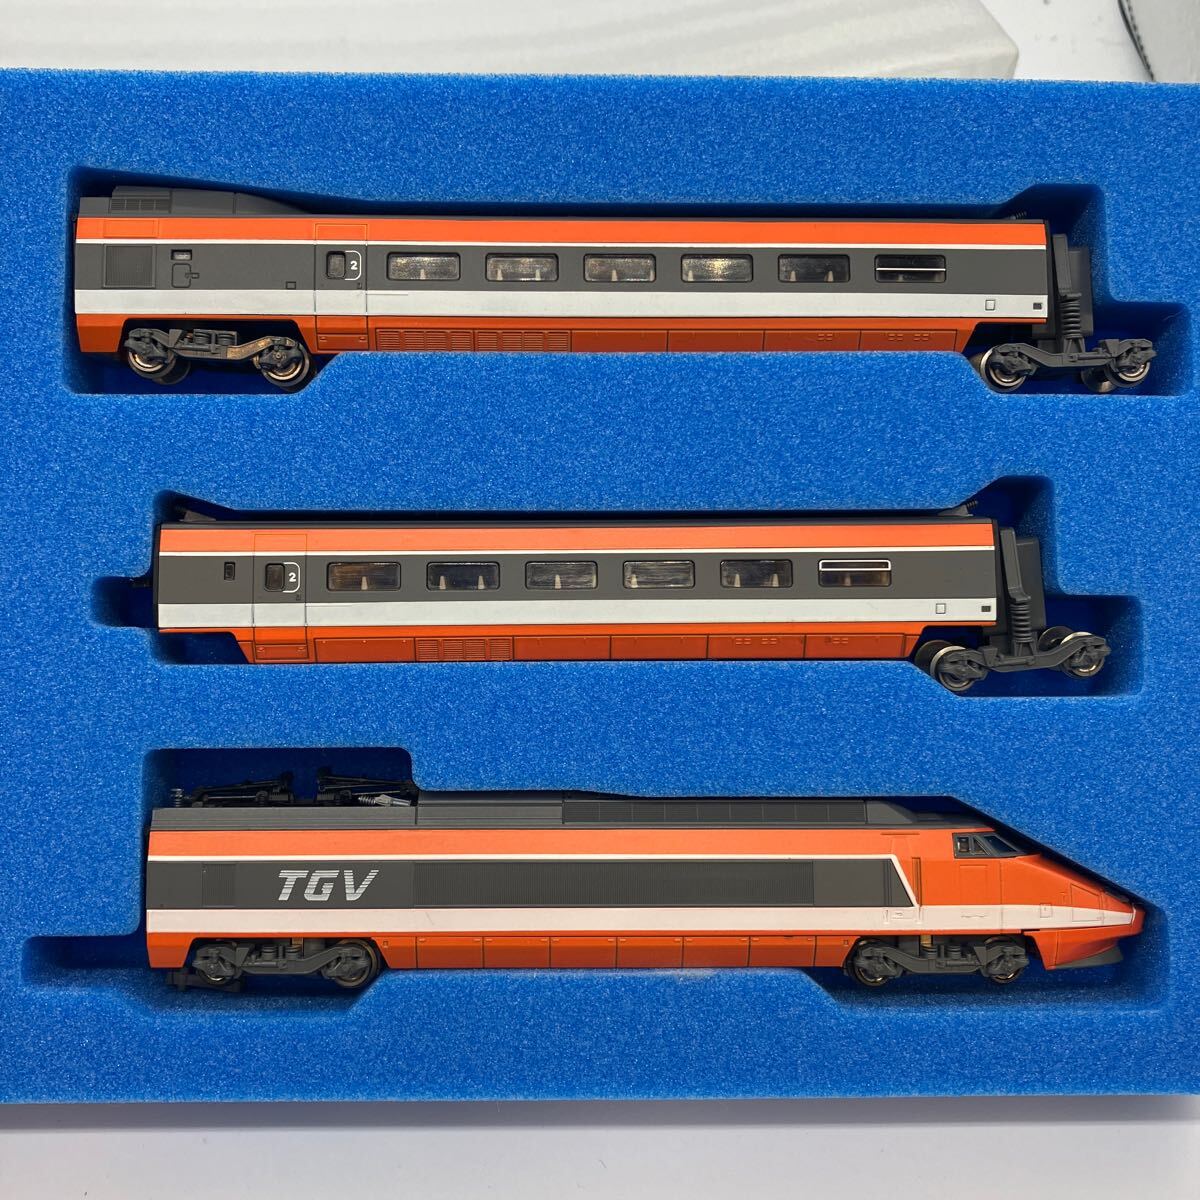 KATO N gauge TGV railroad model Kato France 10-091 cheap 112